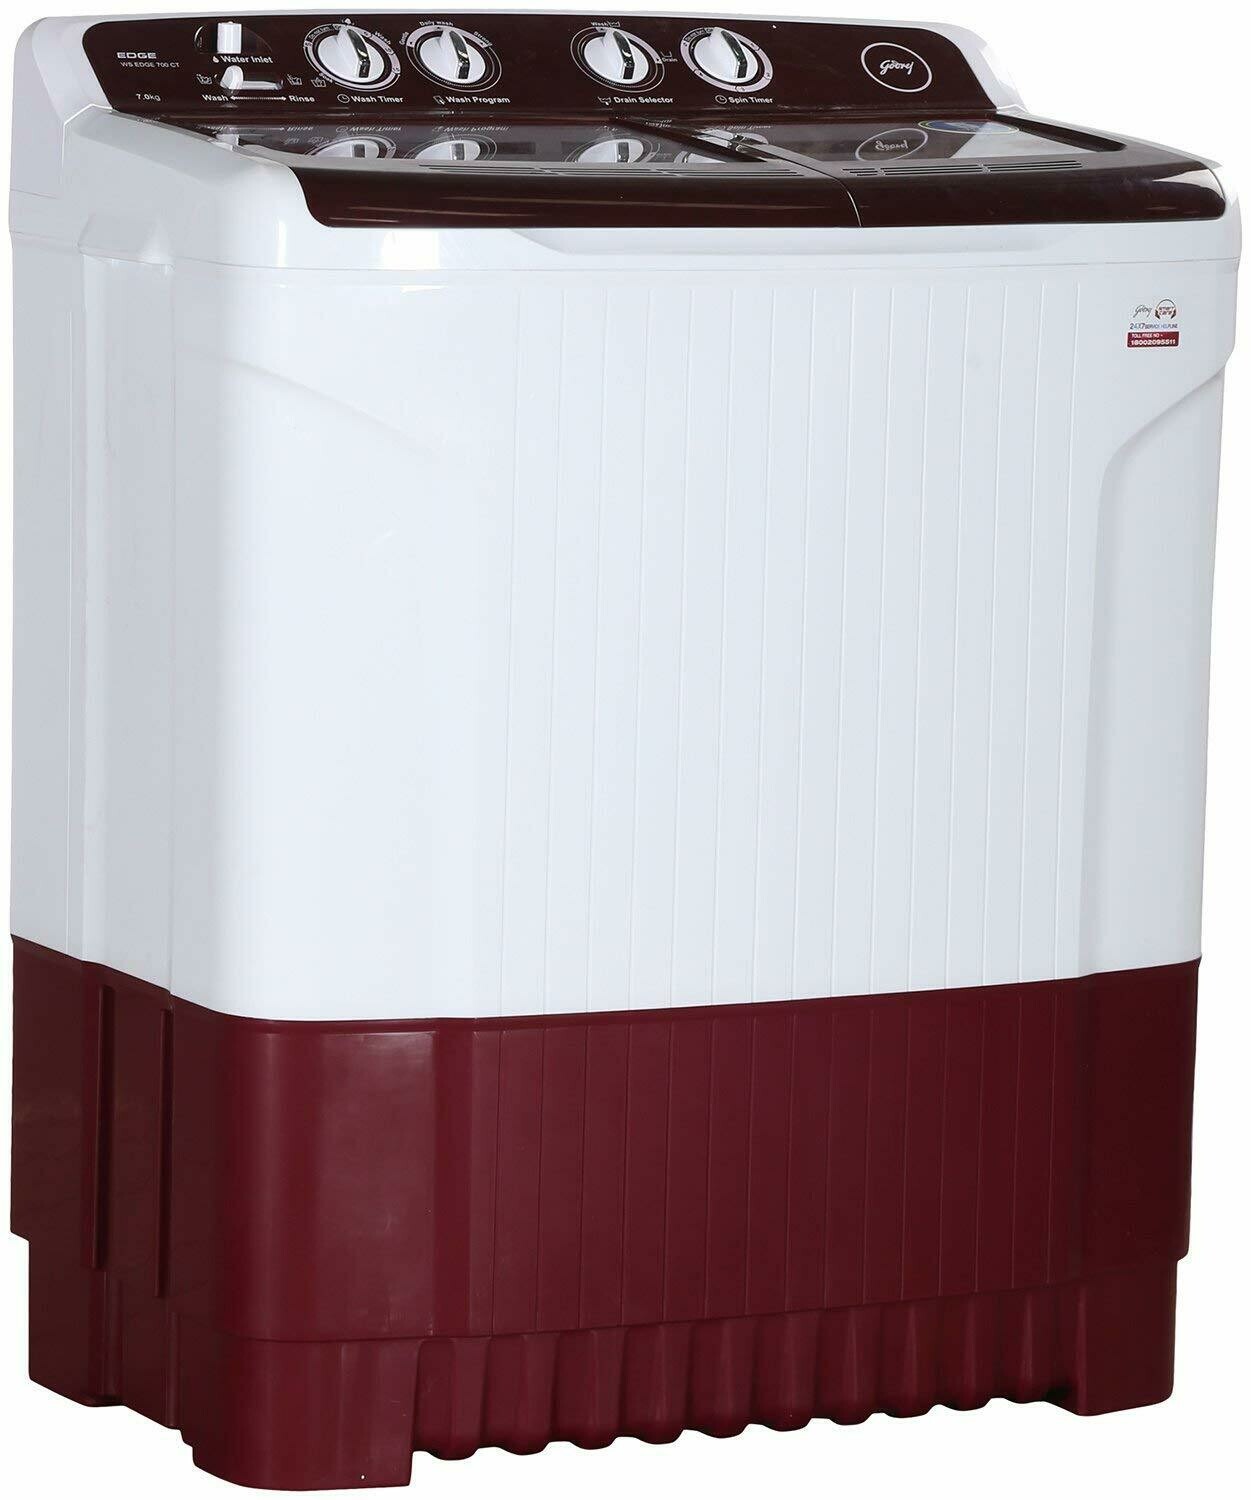 Godrej WS Edge 680 CT Semi-automatic Washing Machine (6.8 Kg, Wine red)